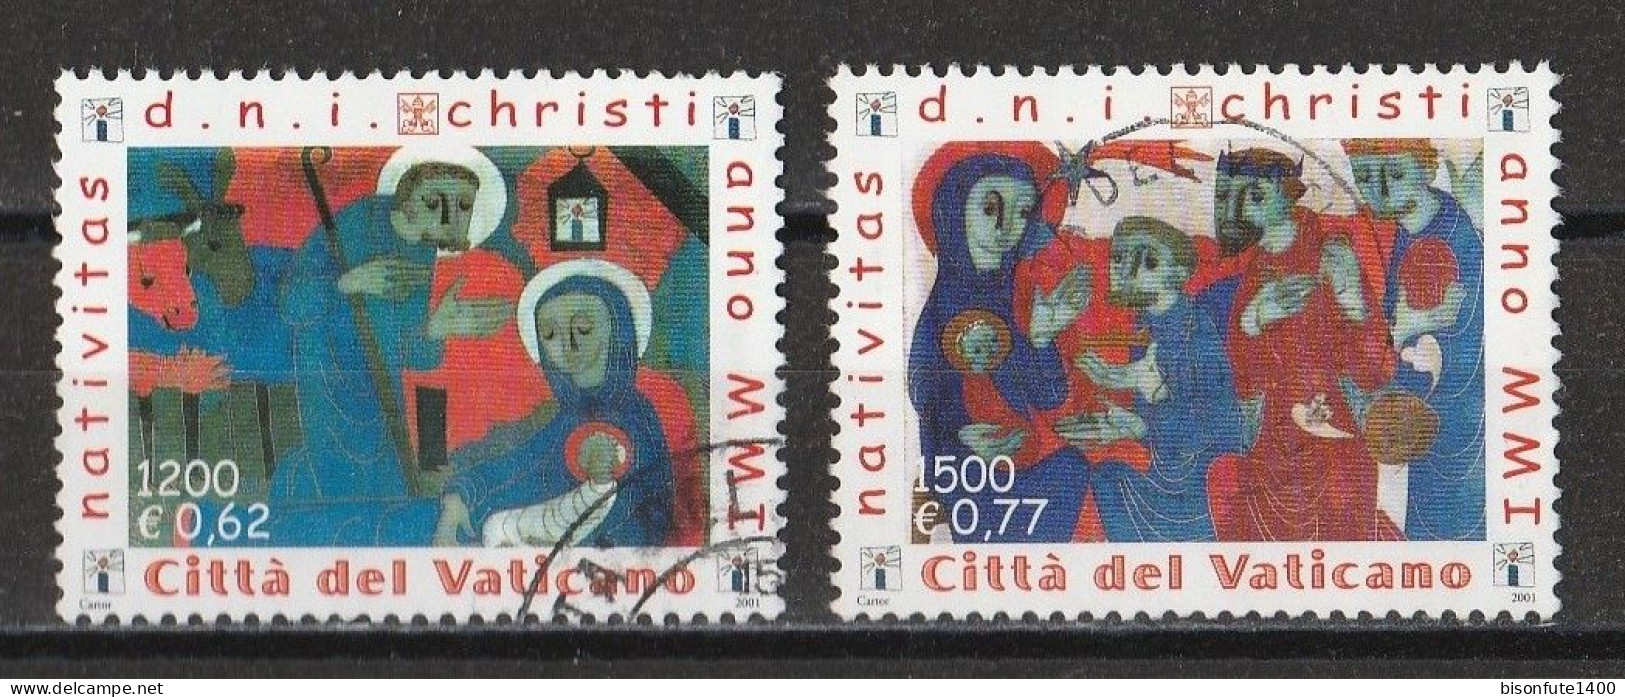 Vatican 2001 : Timbres Yvert & Tellier N° 1238 - 1239 - 1240 - 1246 - 1247 - 1248 Et 1249 Oblitérés. - Used Stamps